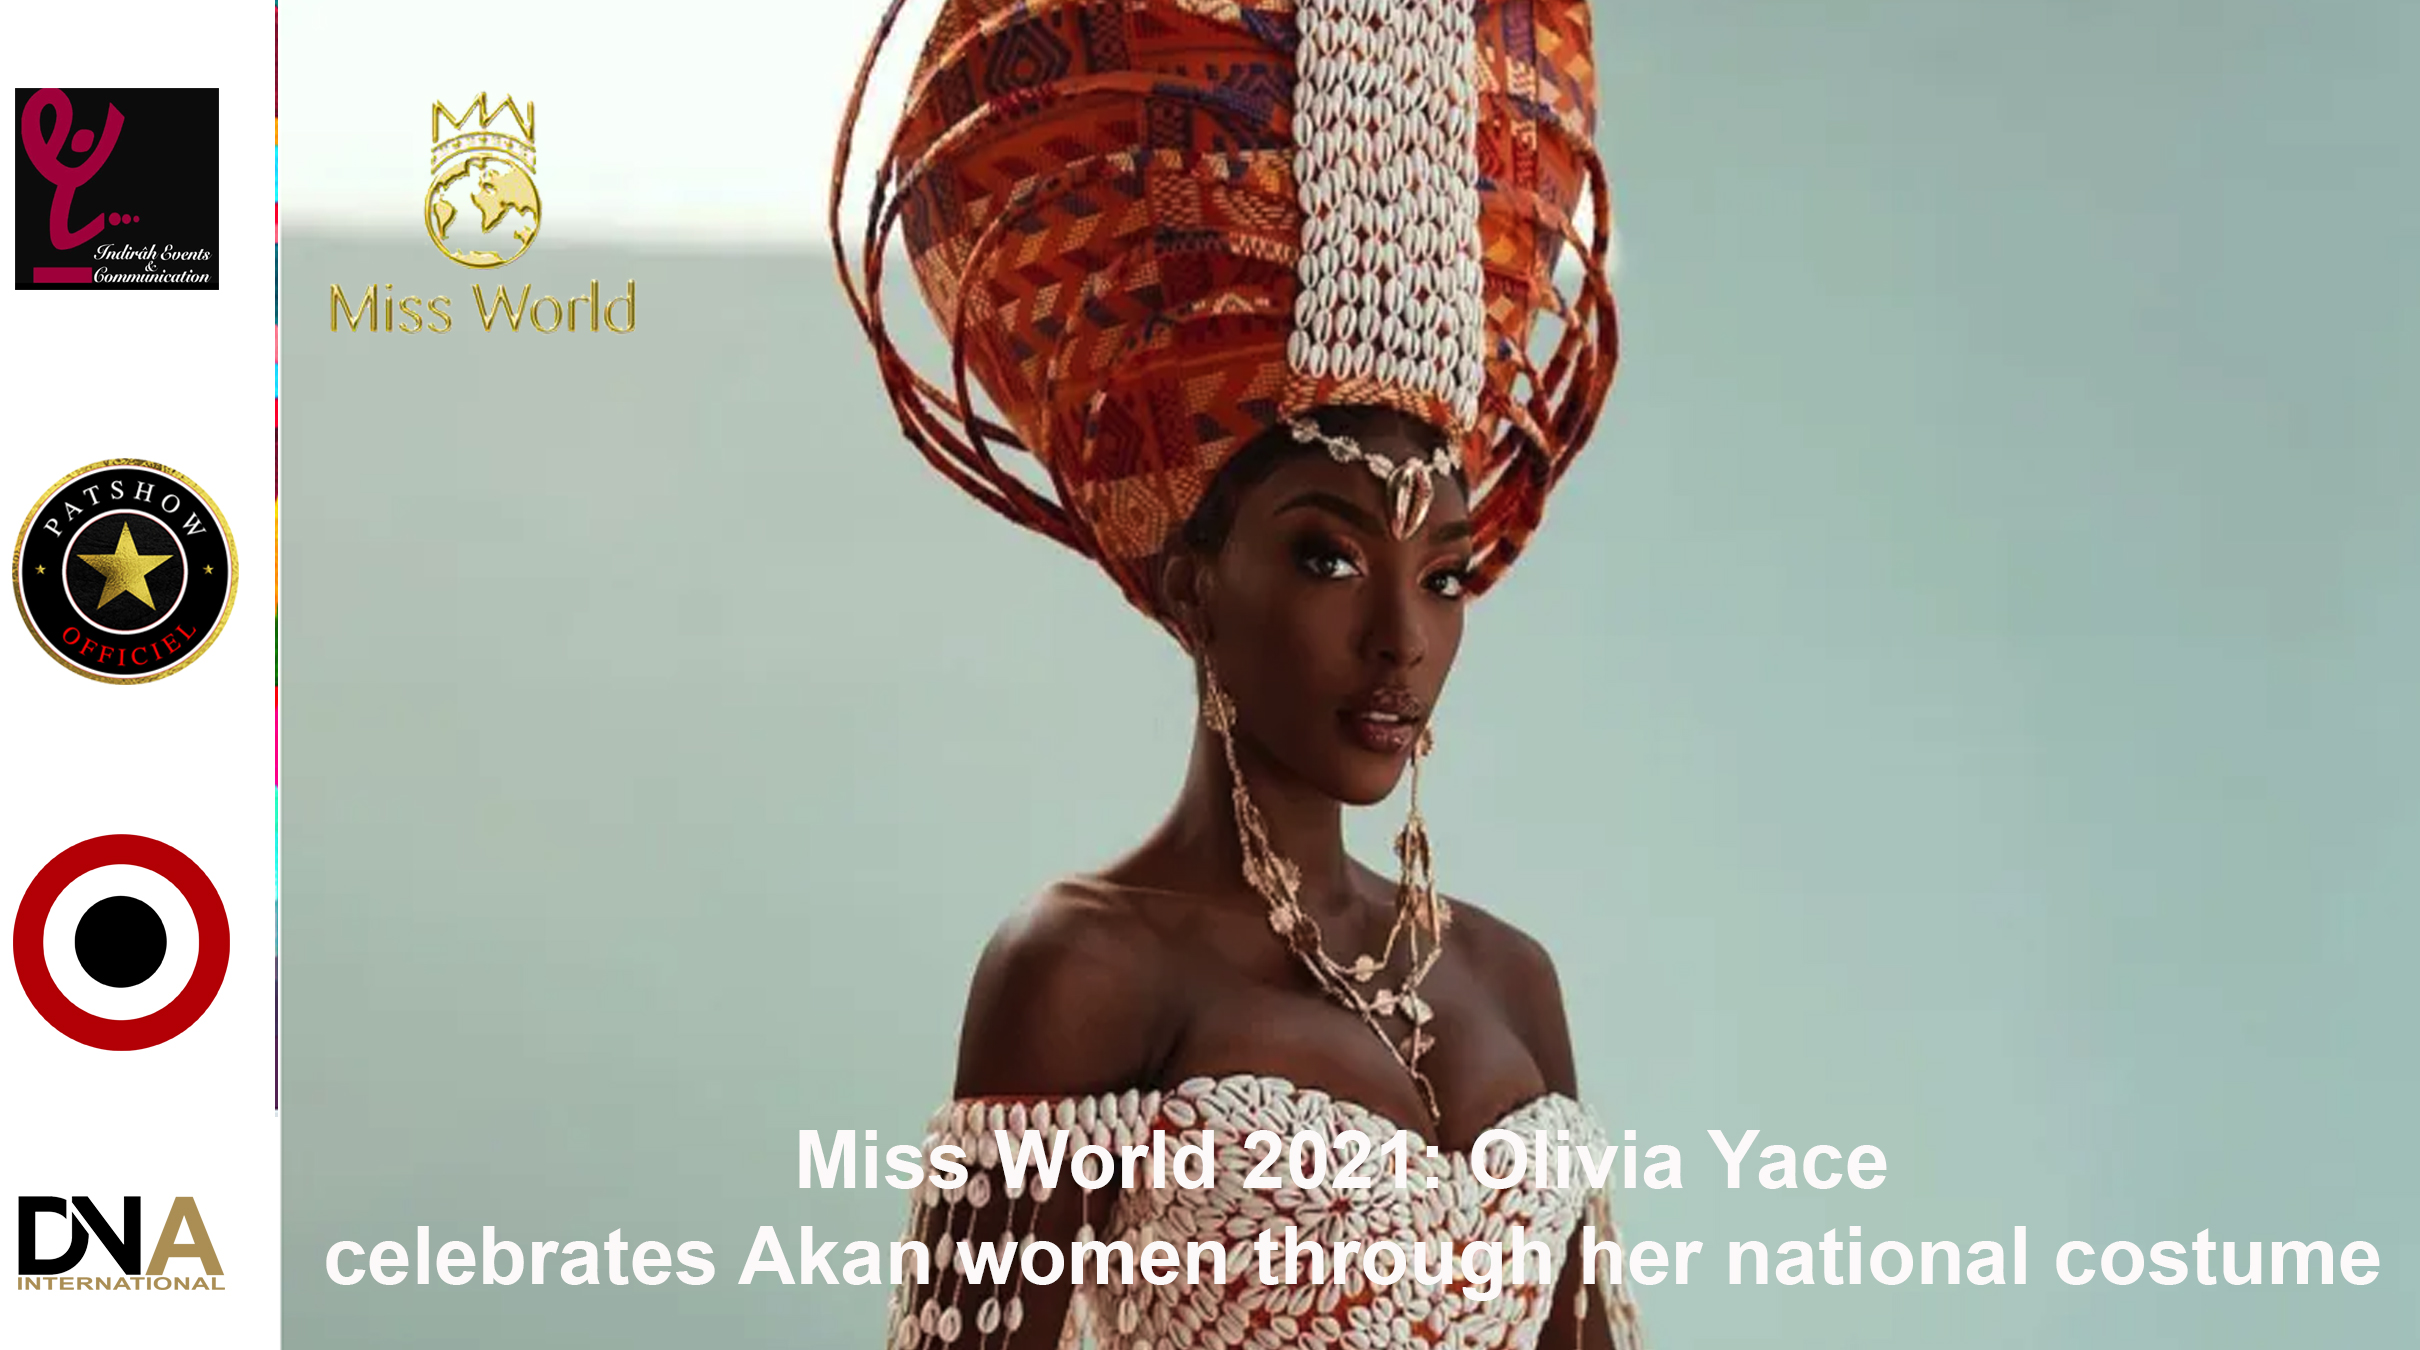 AFRICA-VOGUE-COVER-Miss-World-2021-Olivia-Yace-celebrates-Akan-women-through-her-national-costume-DN-AFRICA-DN-A-INTERNATIONAL-Media-Partner